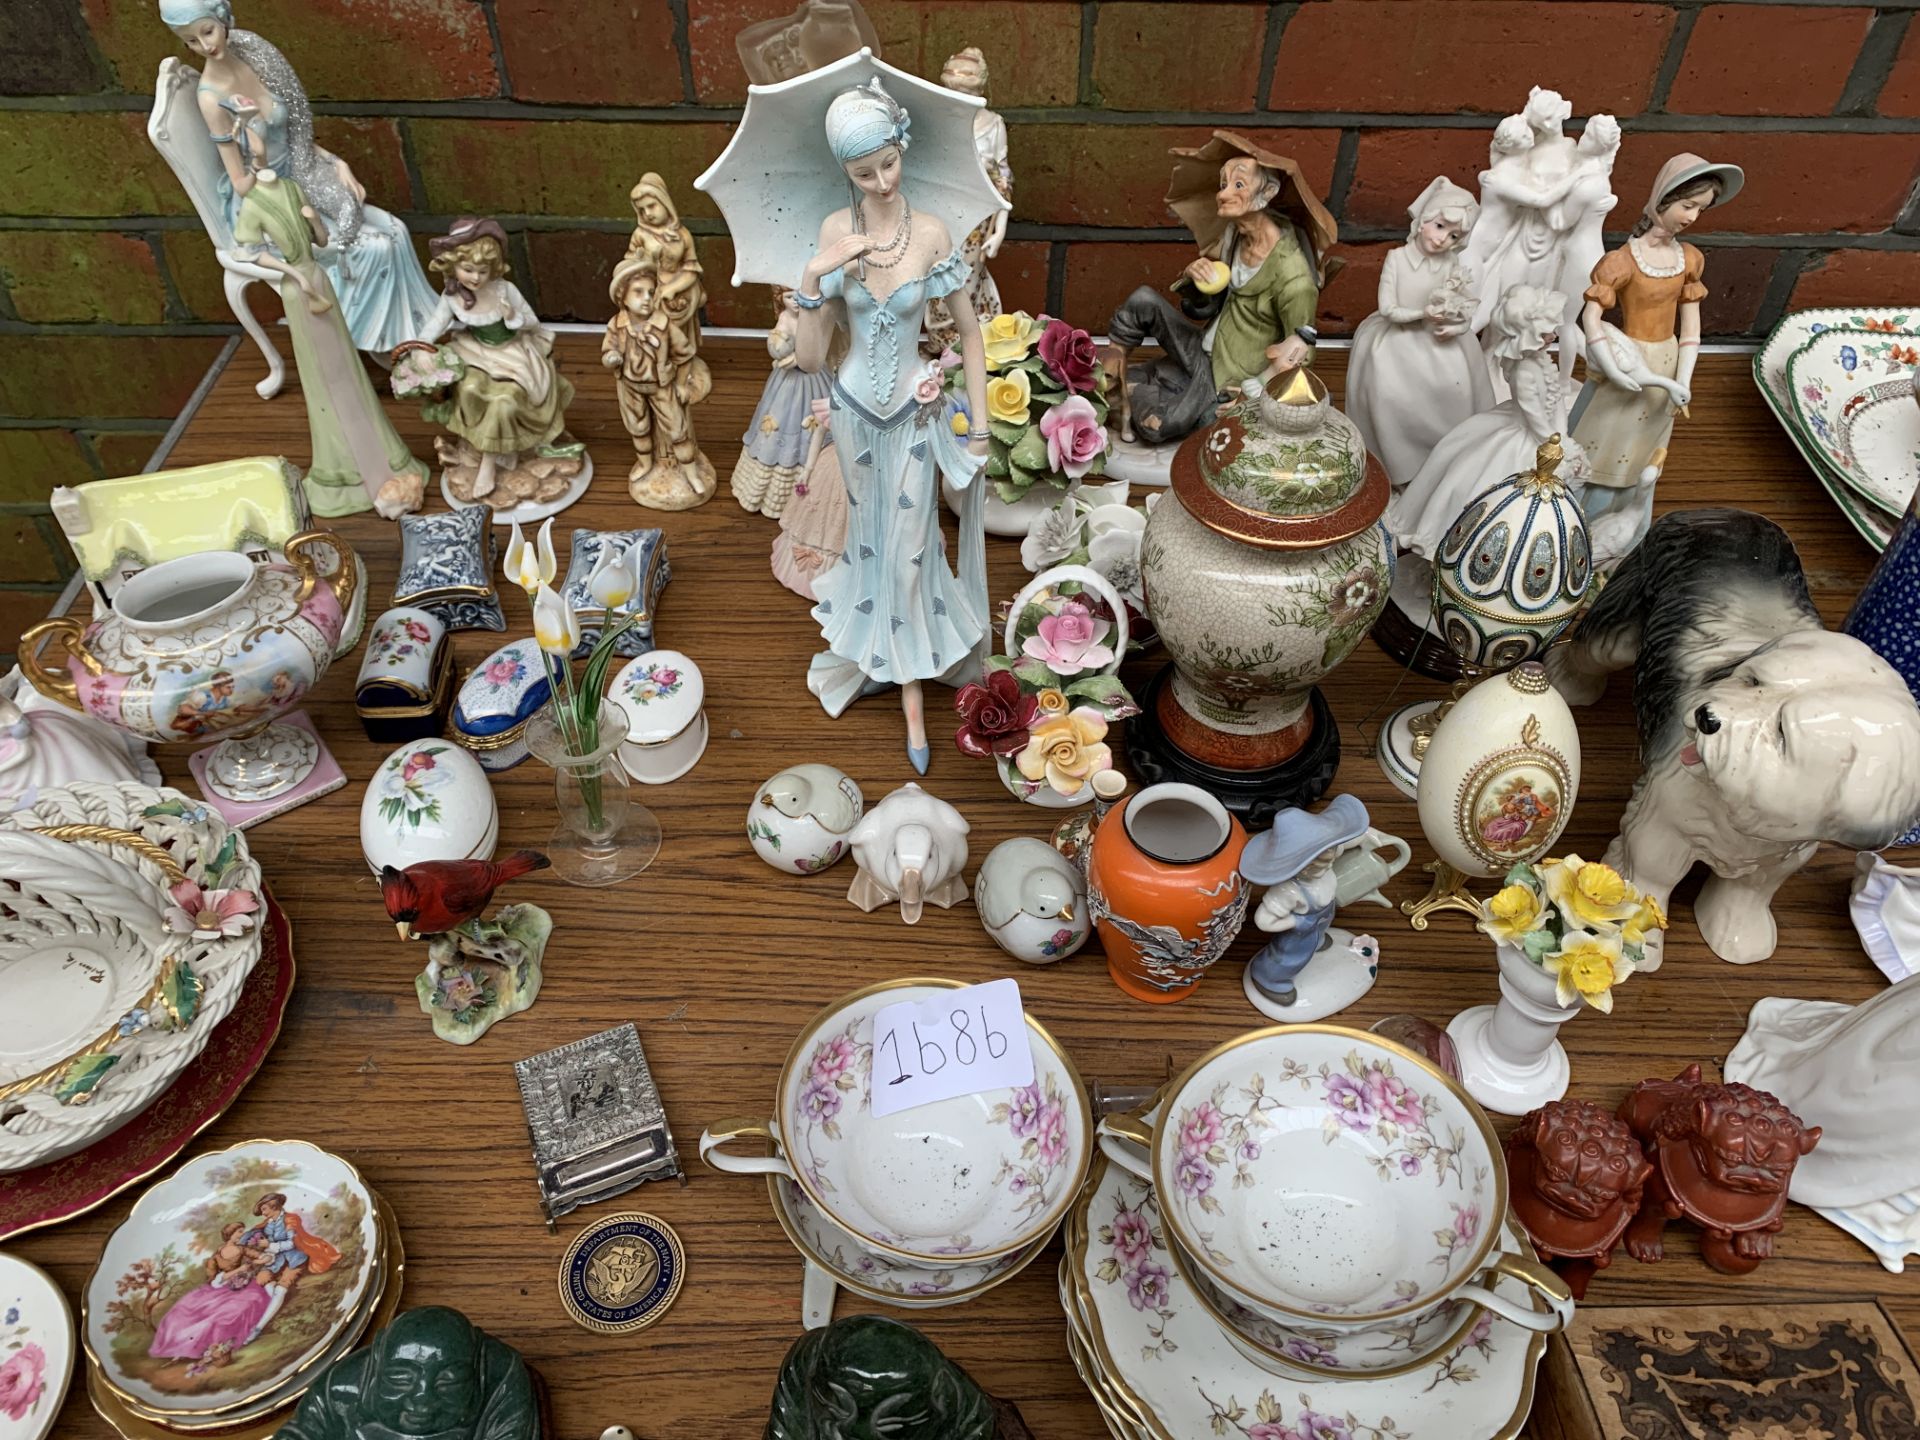 Quantity of china ornaments including Royal Doulton and Coalport